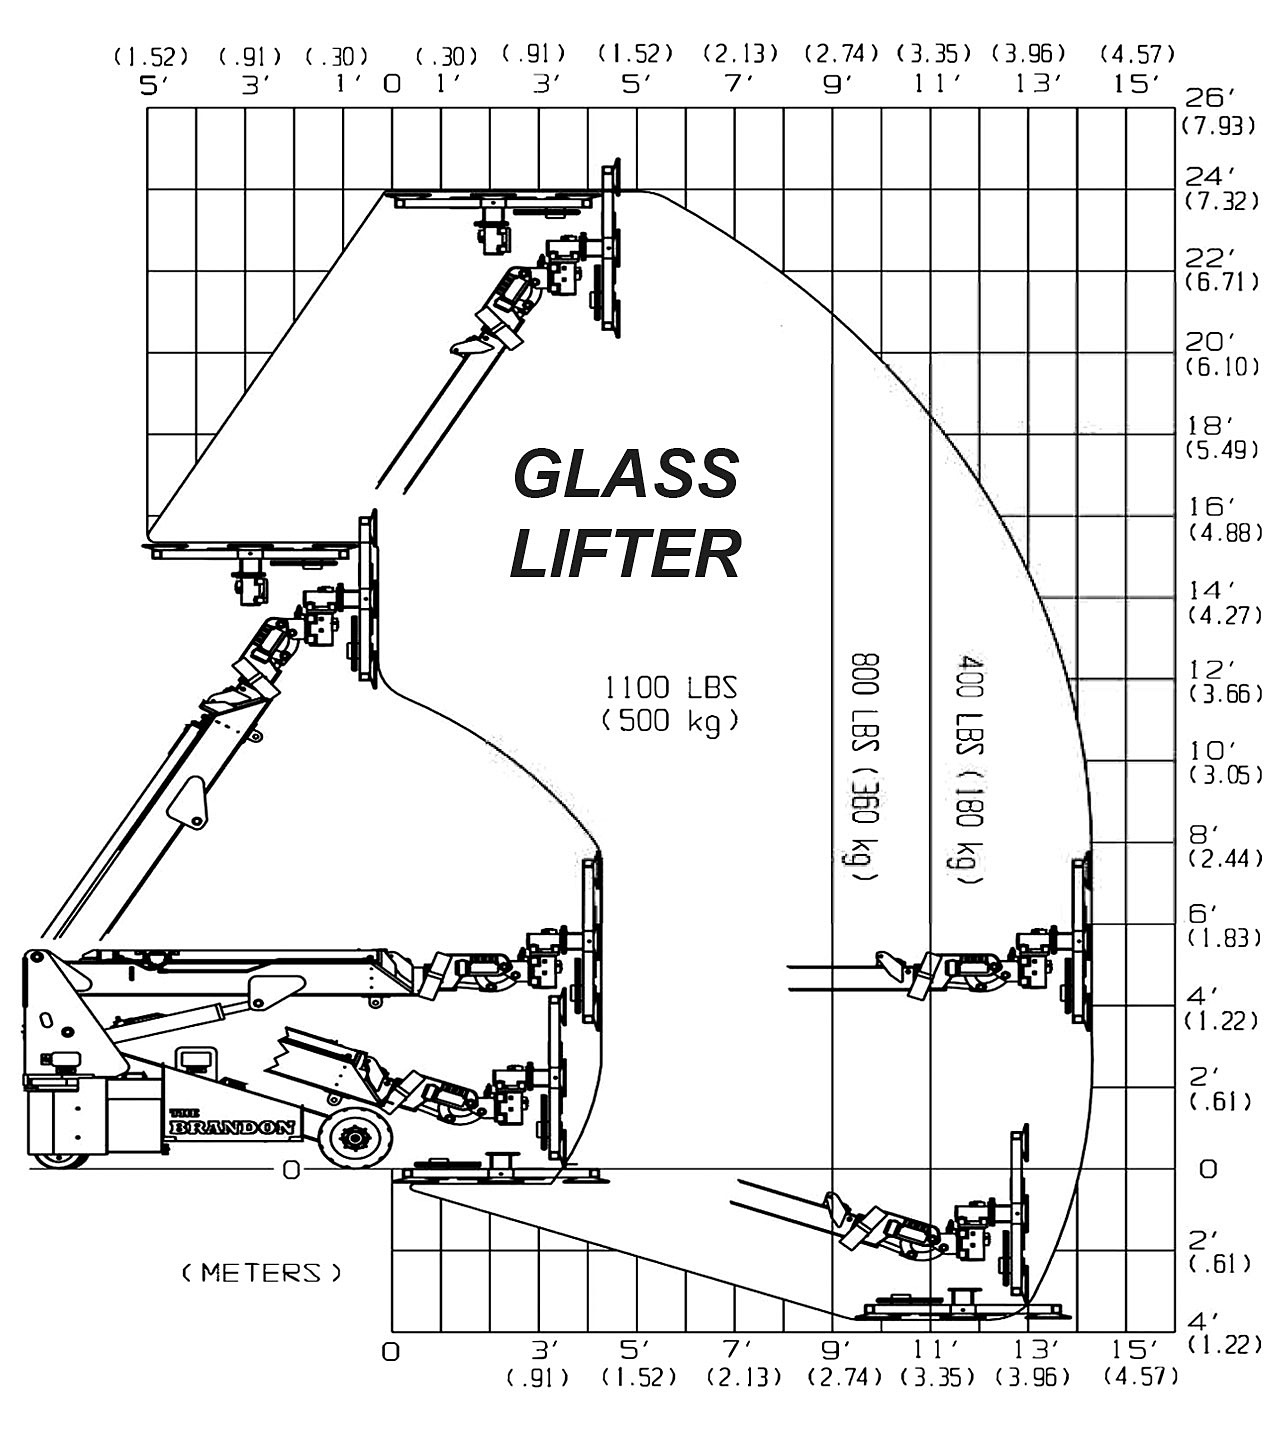 The Brandon 6 Glass Lifter Load Capacity